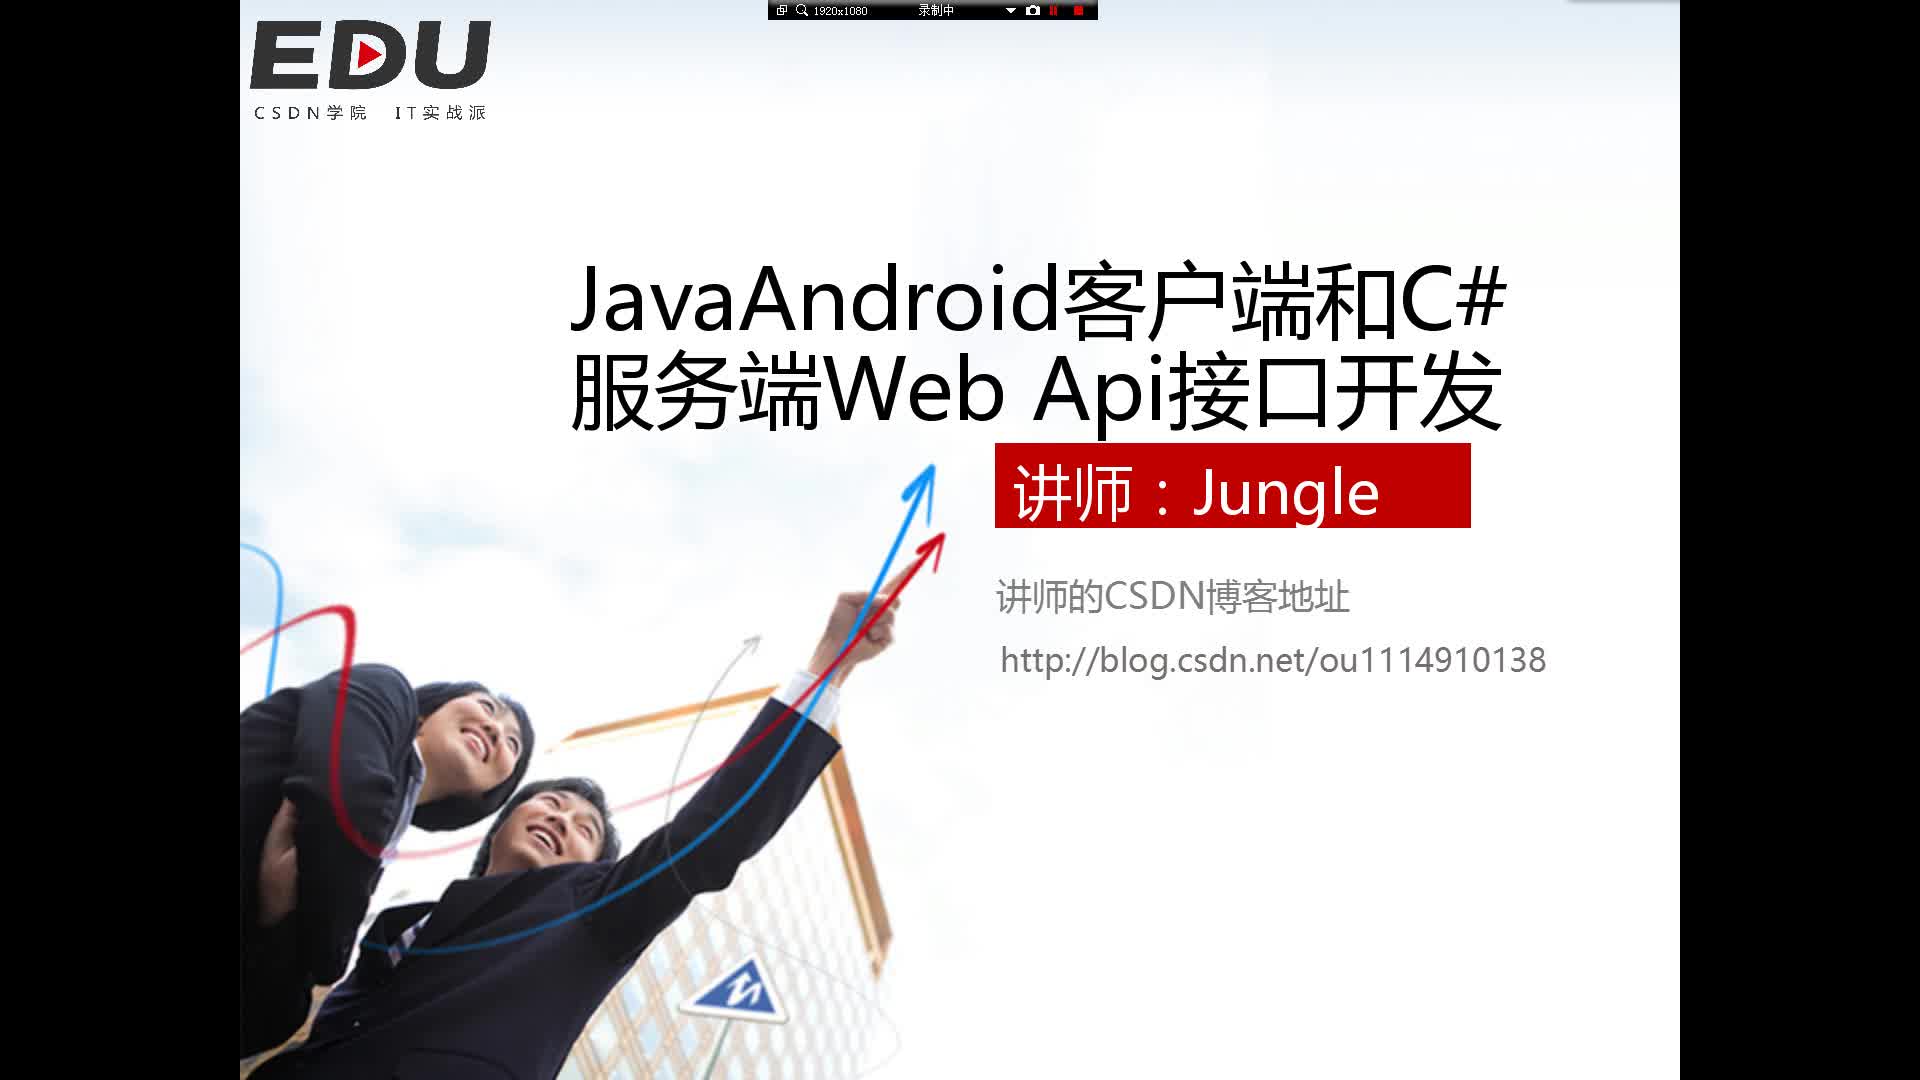 JavaAndroid客户端和C#服务端Web Api接口开发